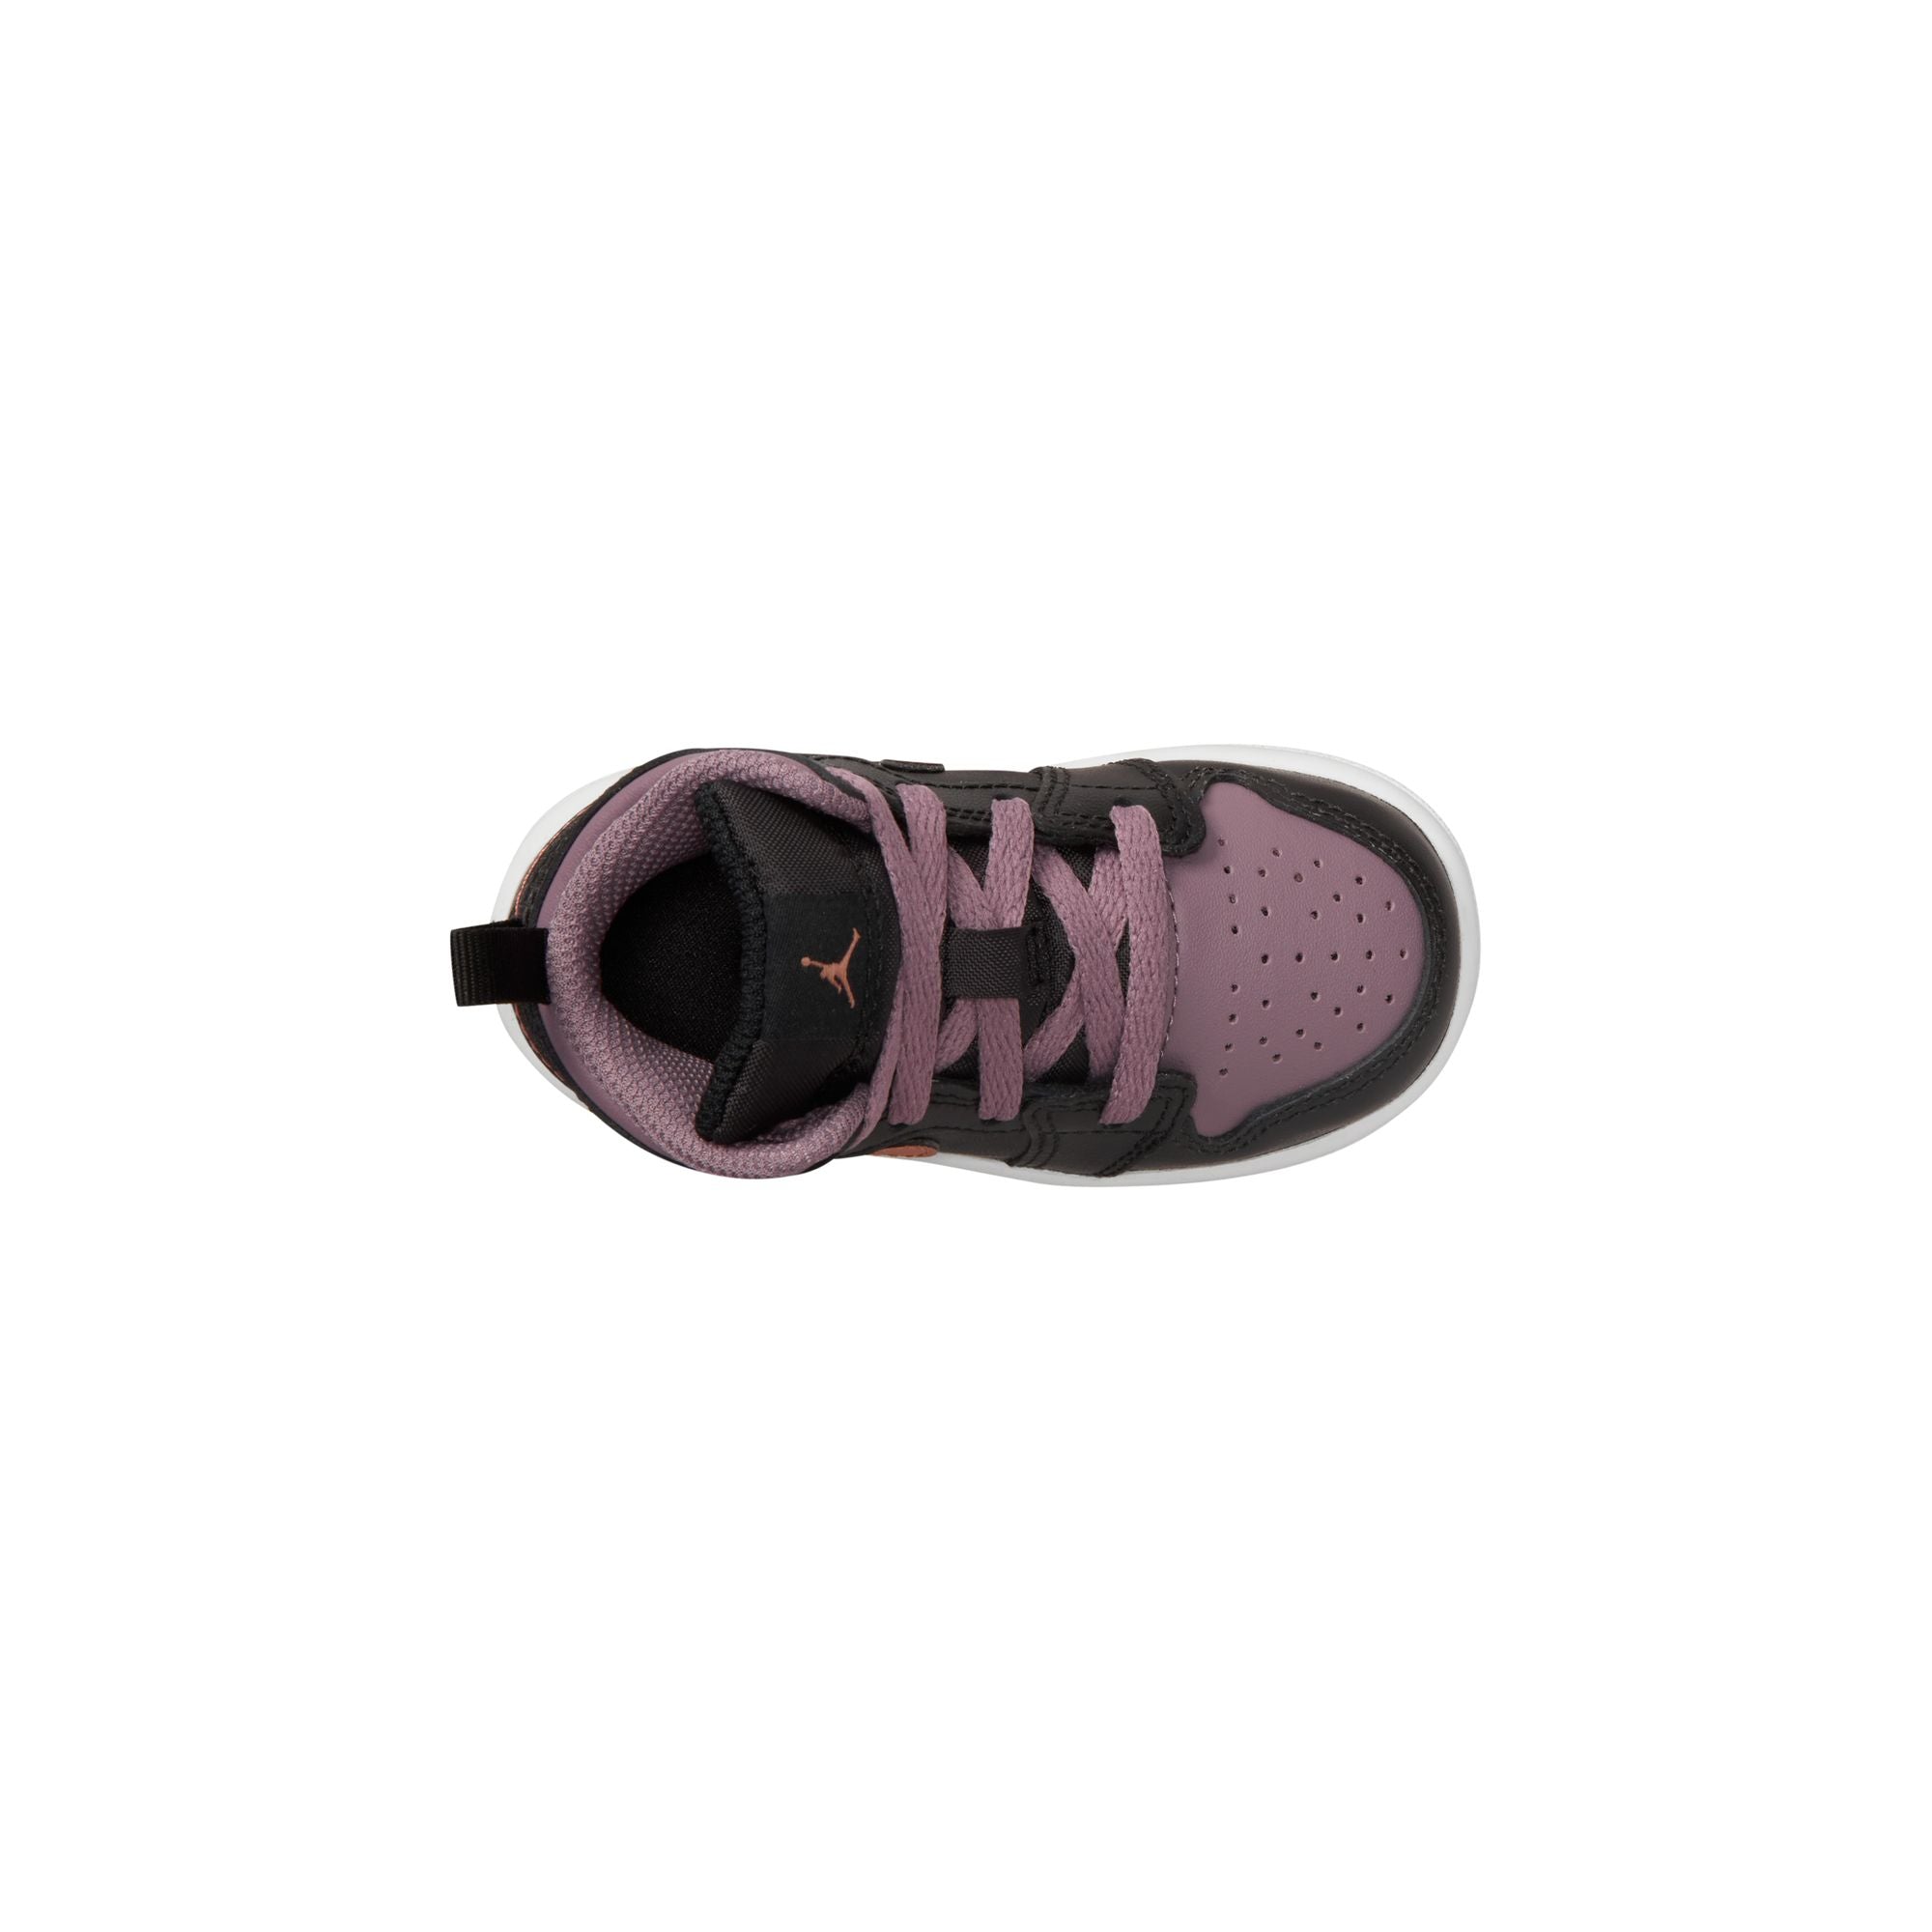 Nike Air Jordan 1 MID SE (TD)